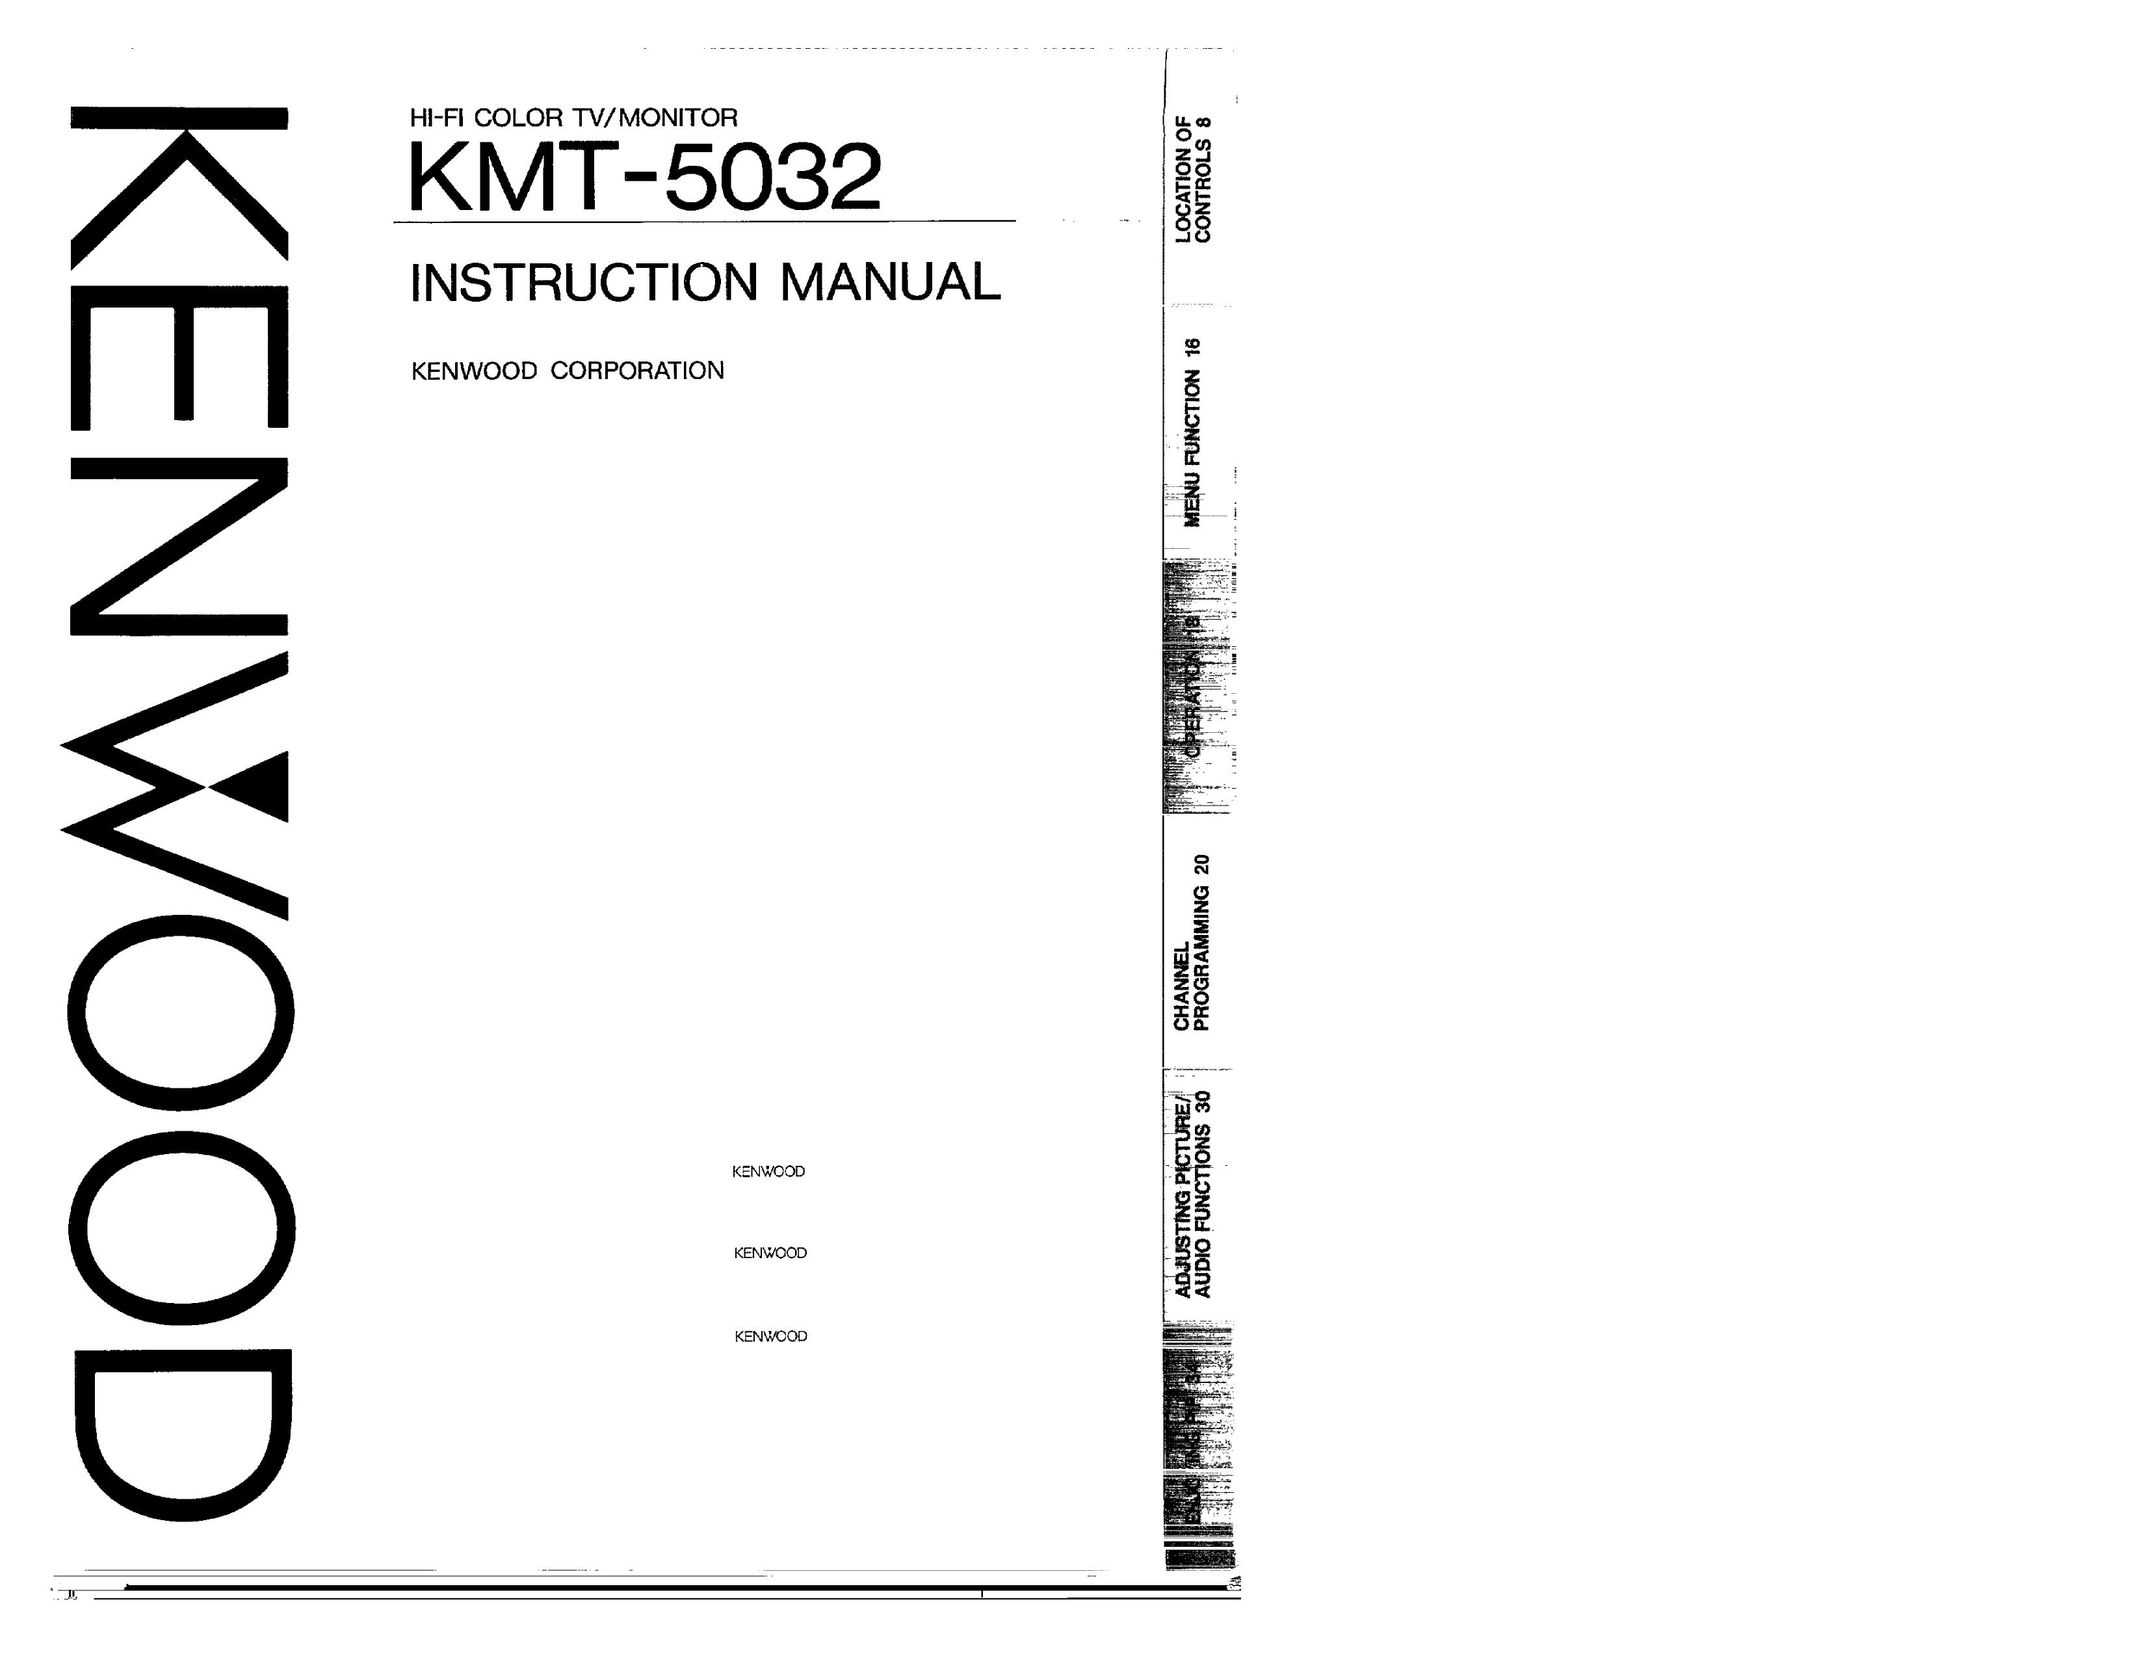 Kenwood KMT-5032 CRT Television User Manual